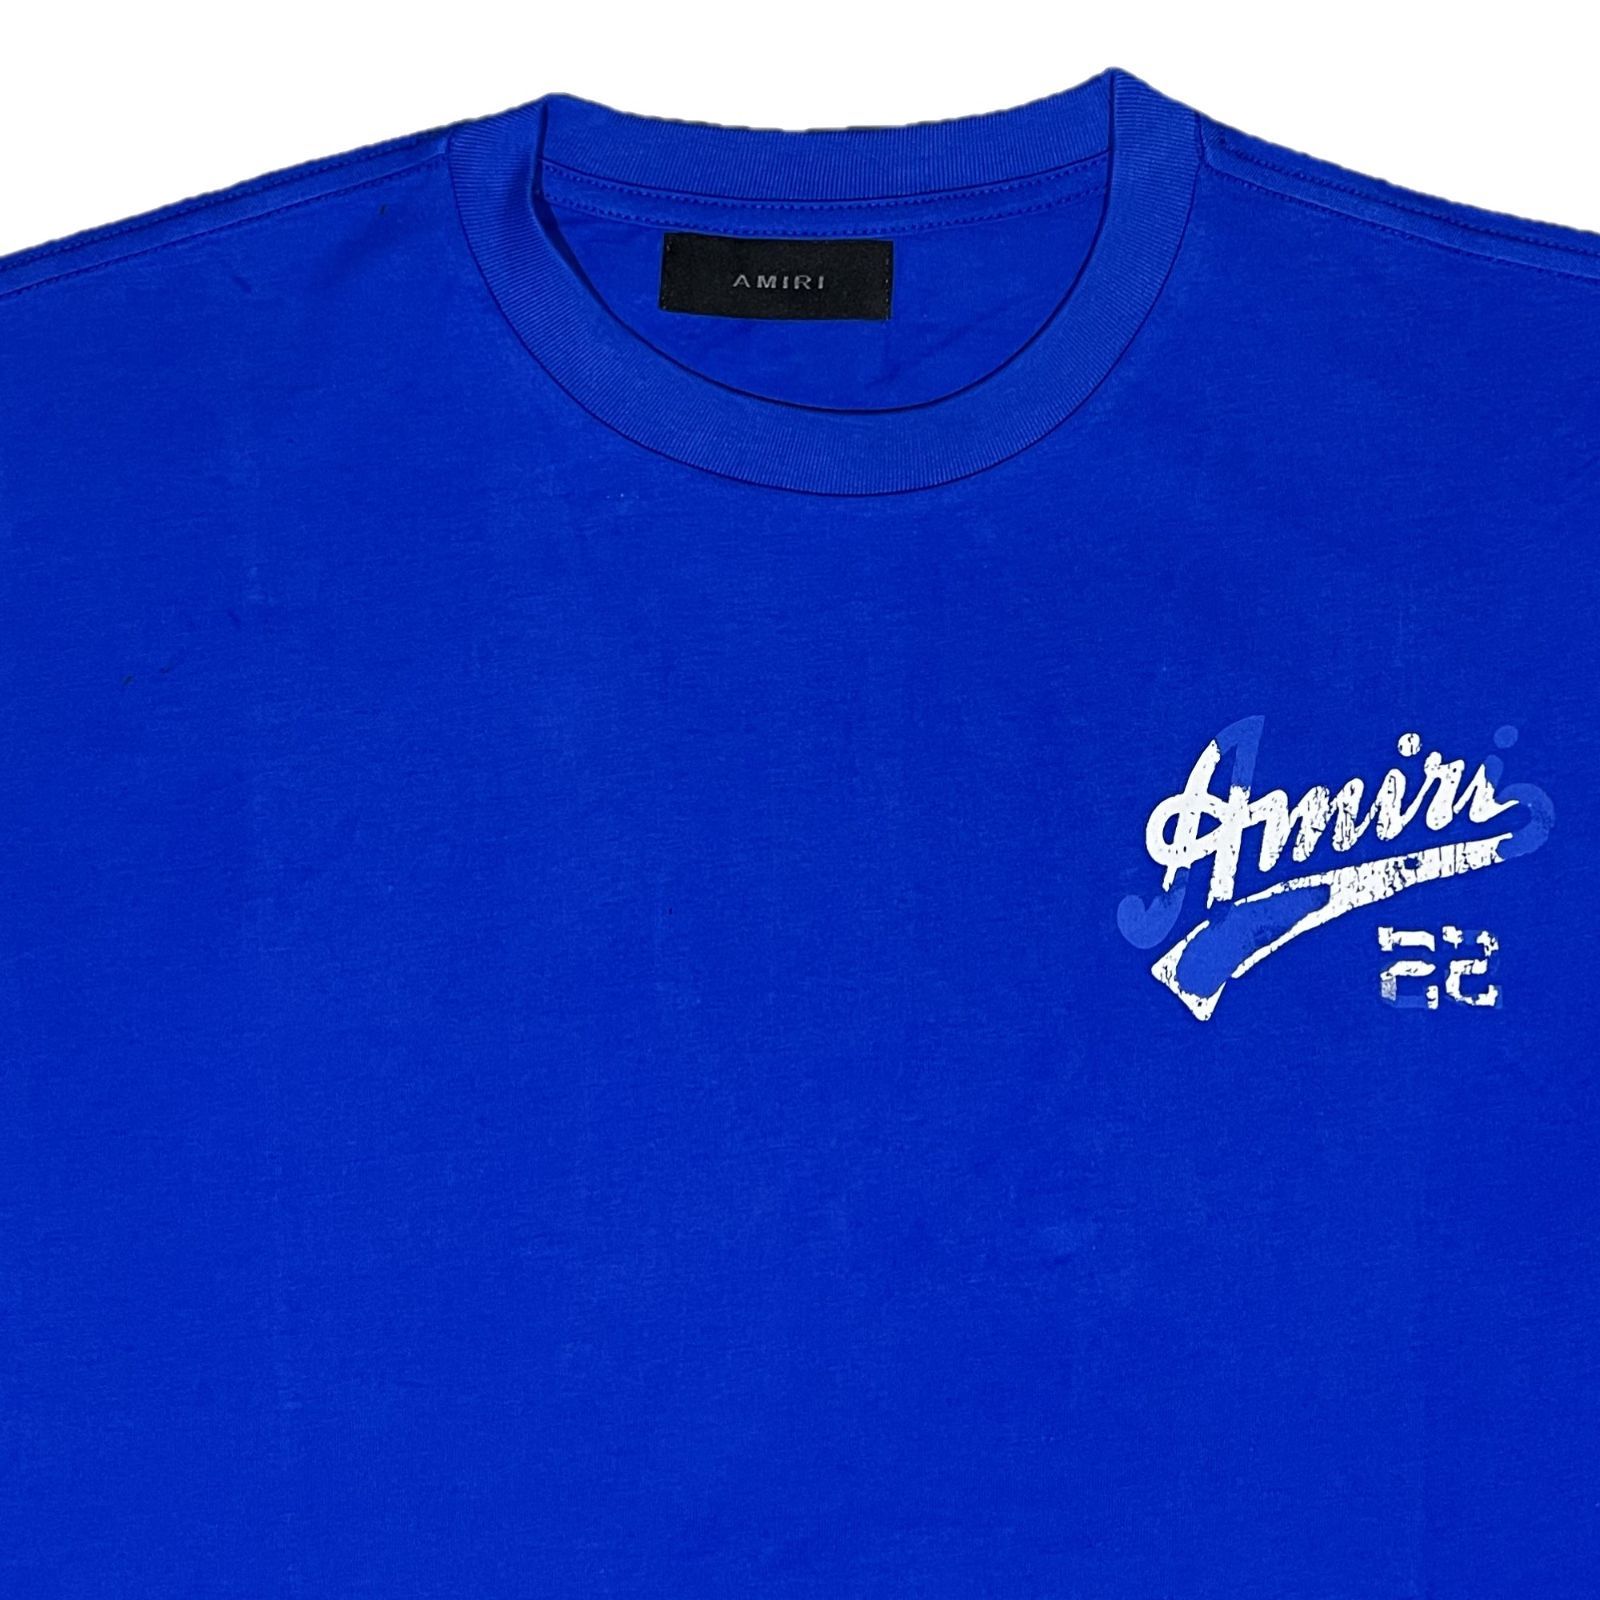 AMIRI アミリ 22 JERSEY Tシャツ ホワイト XL